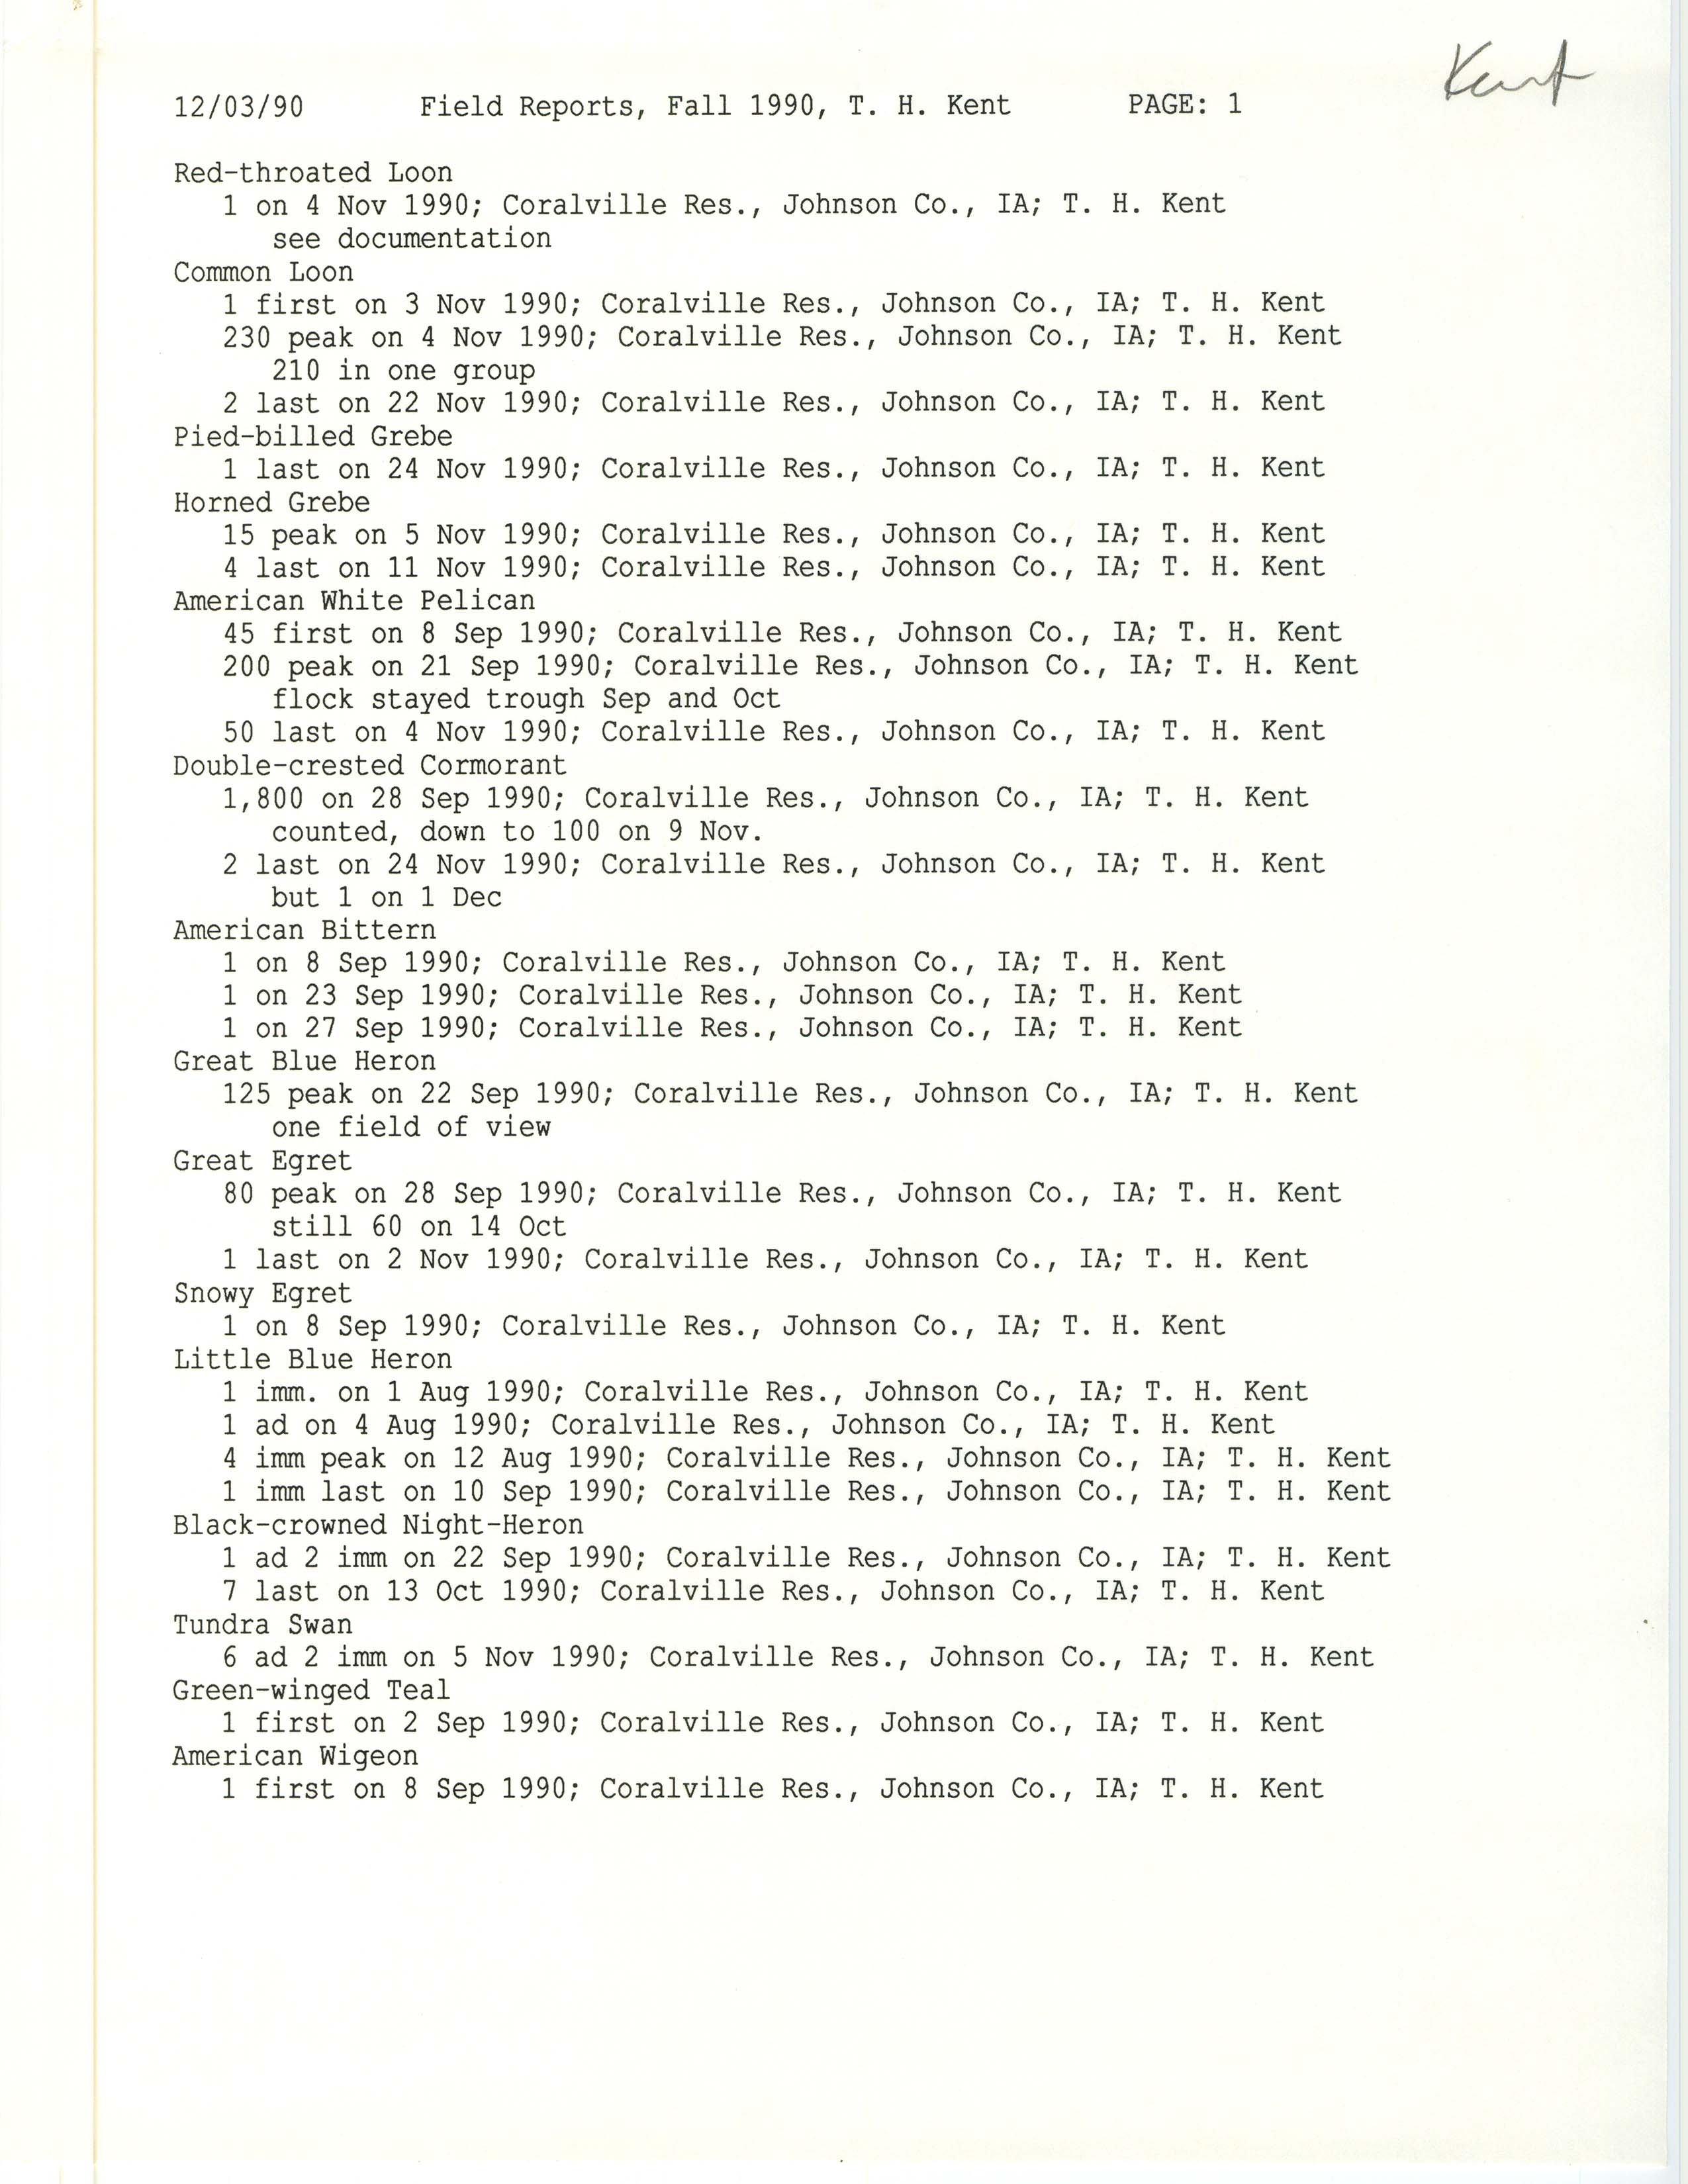 Field reports, Thomas H. Kent, fall 1990